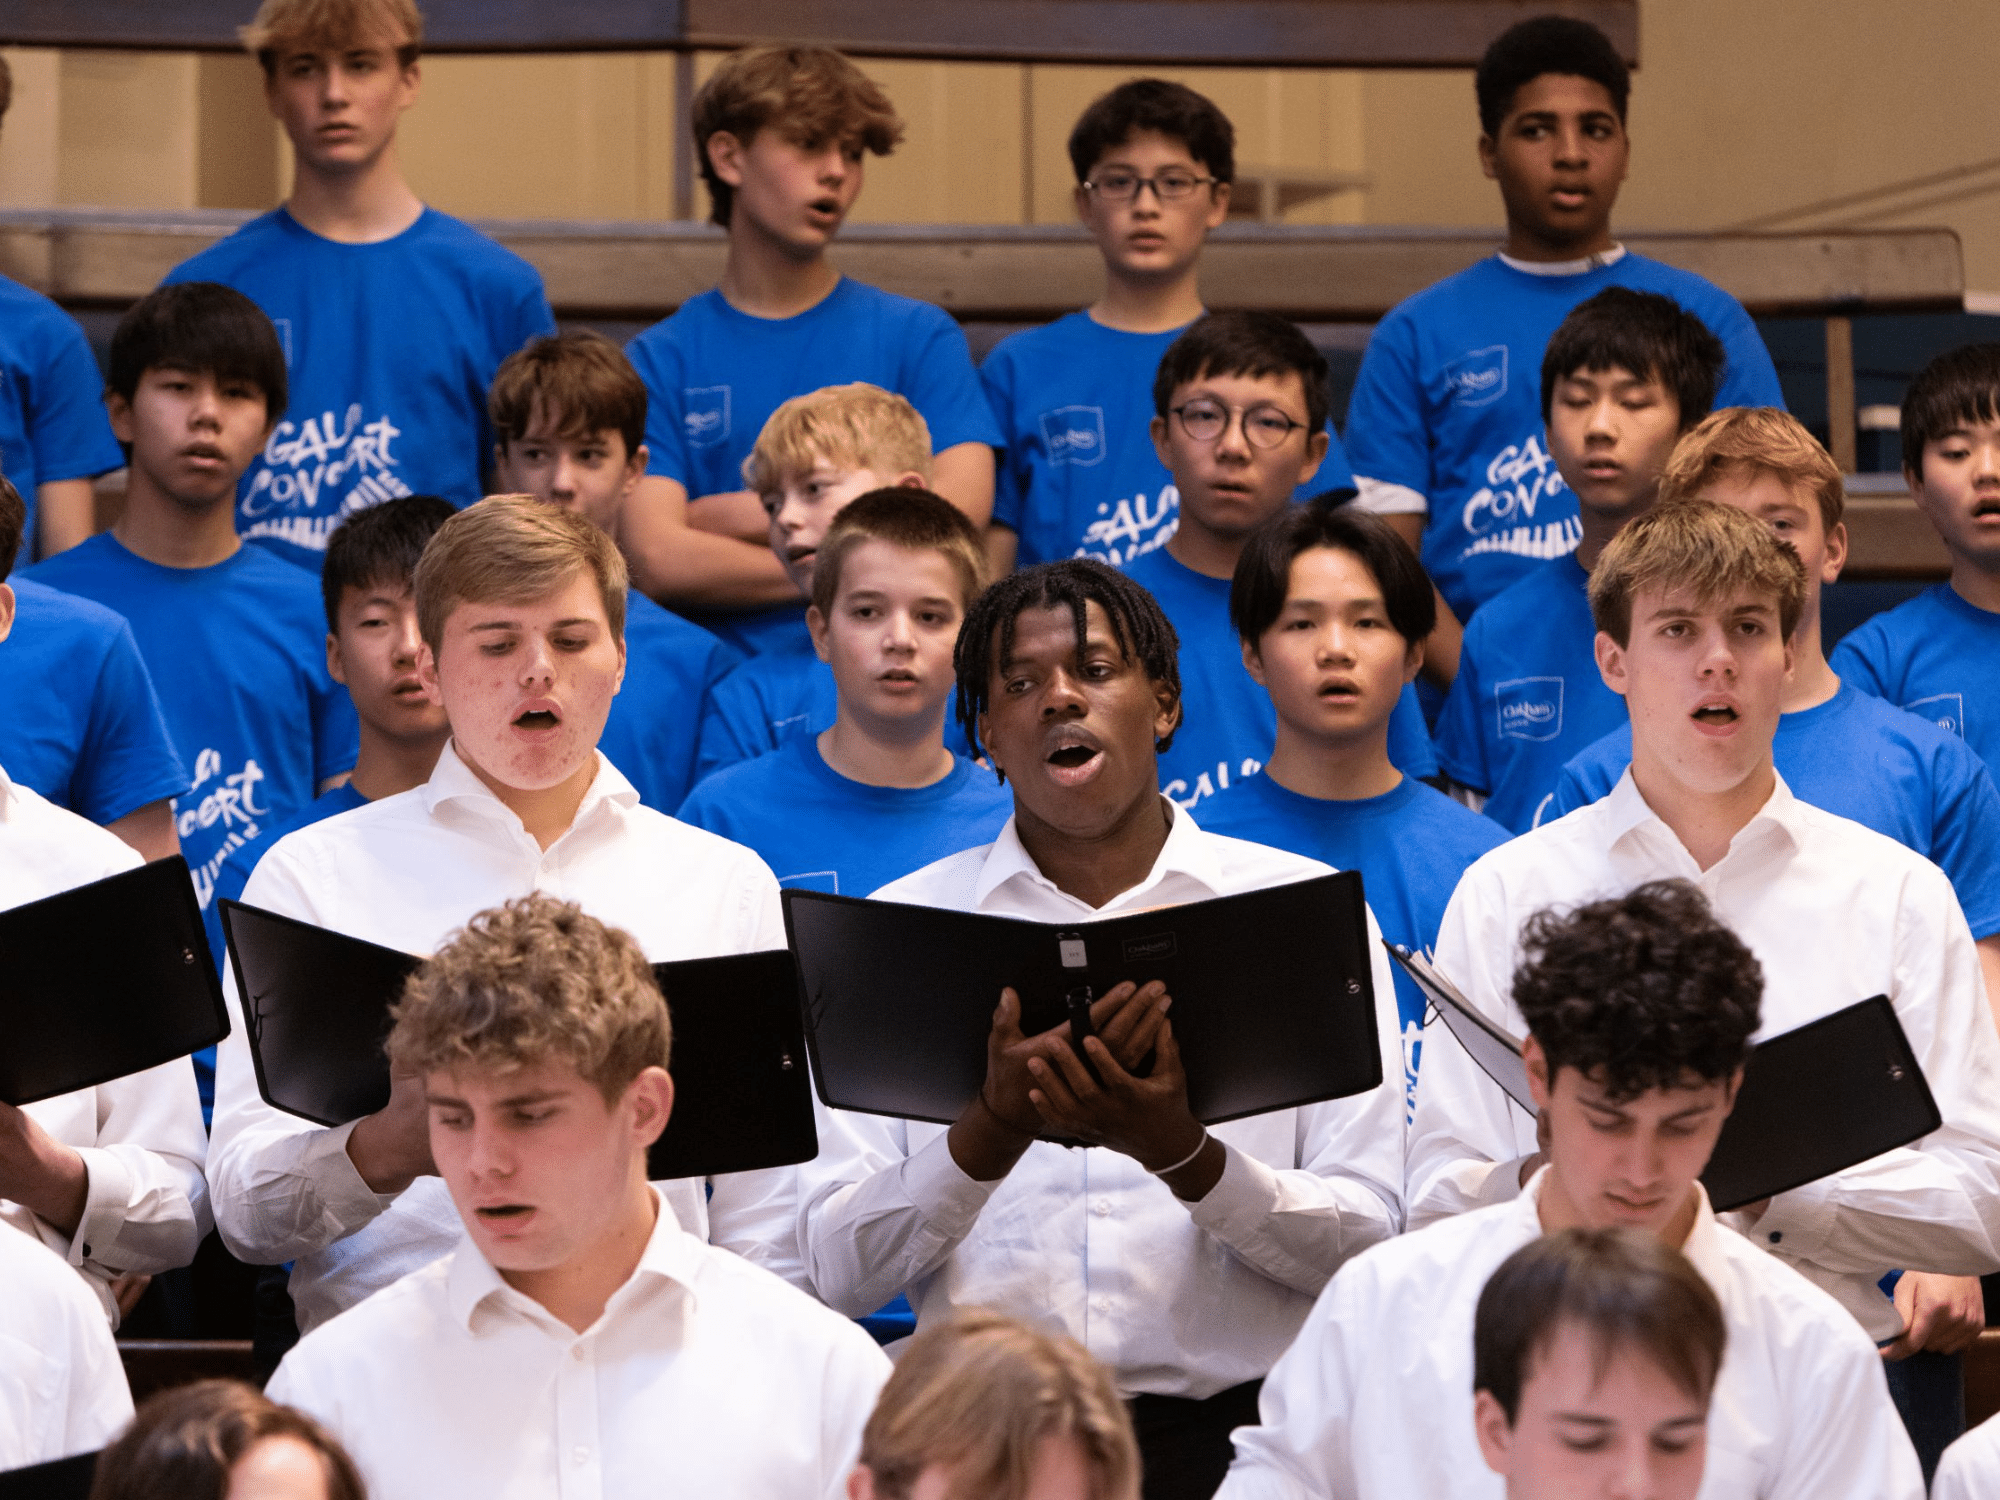 Students singing in choir